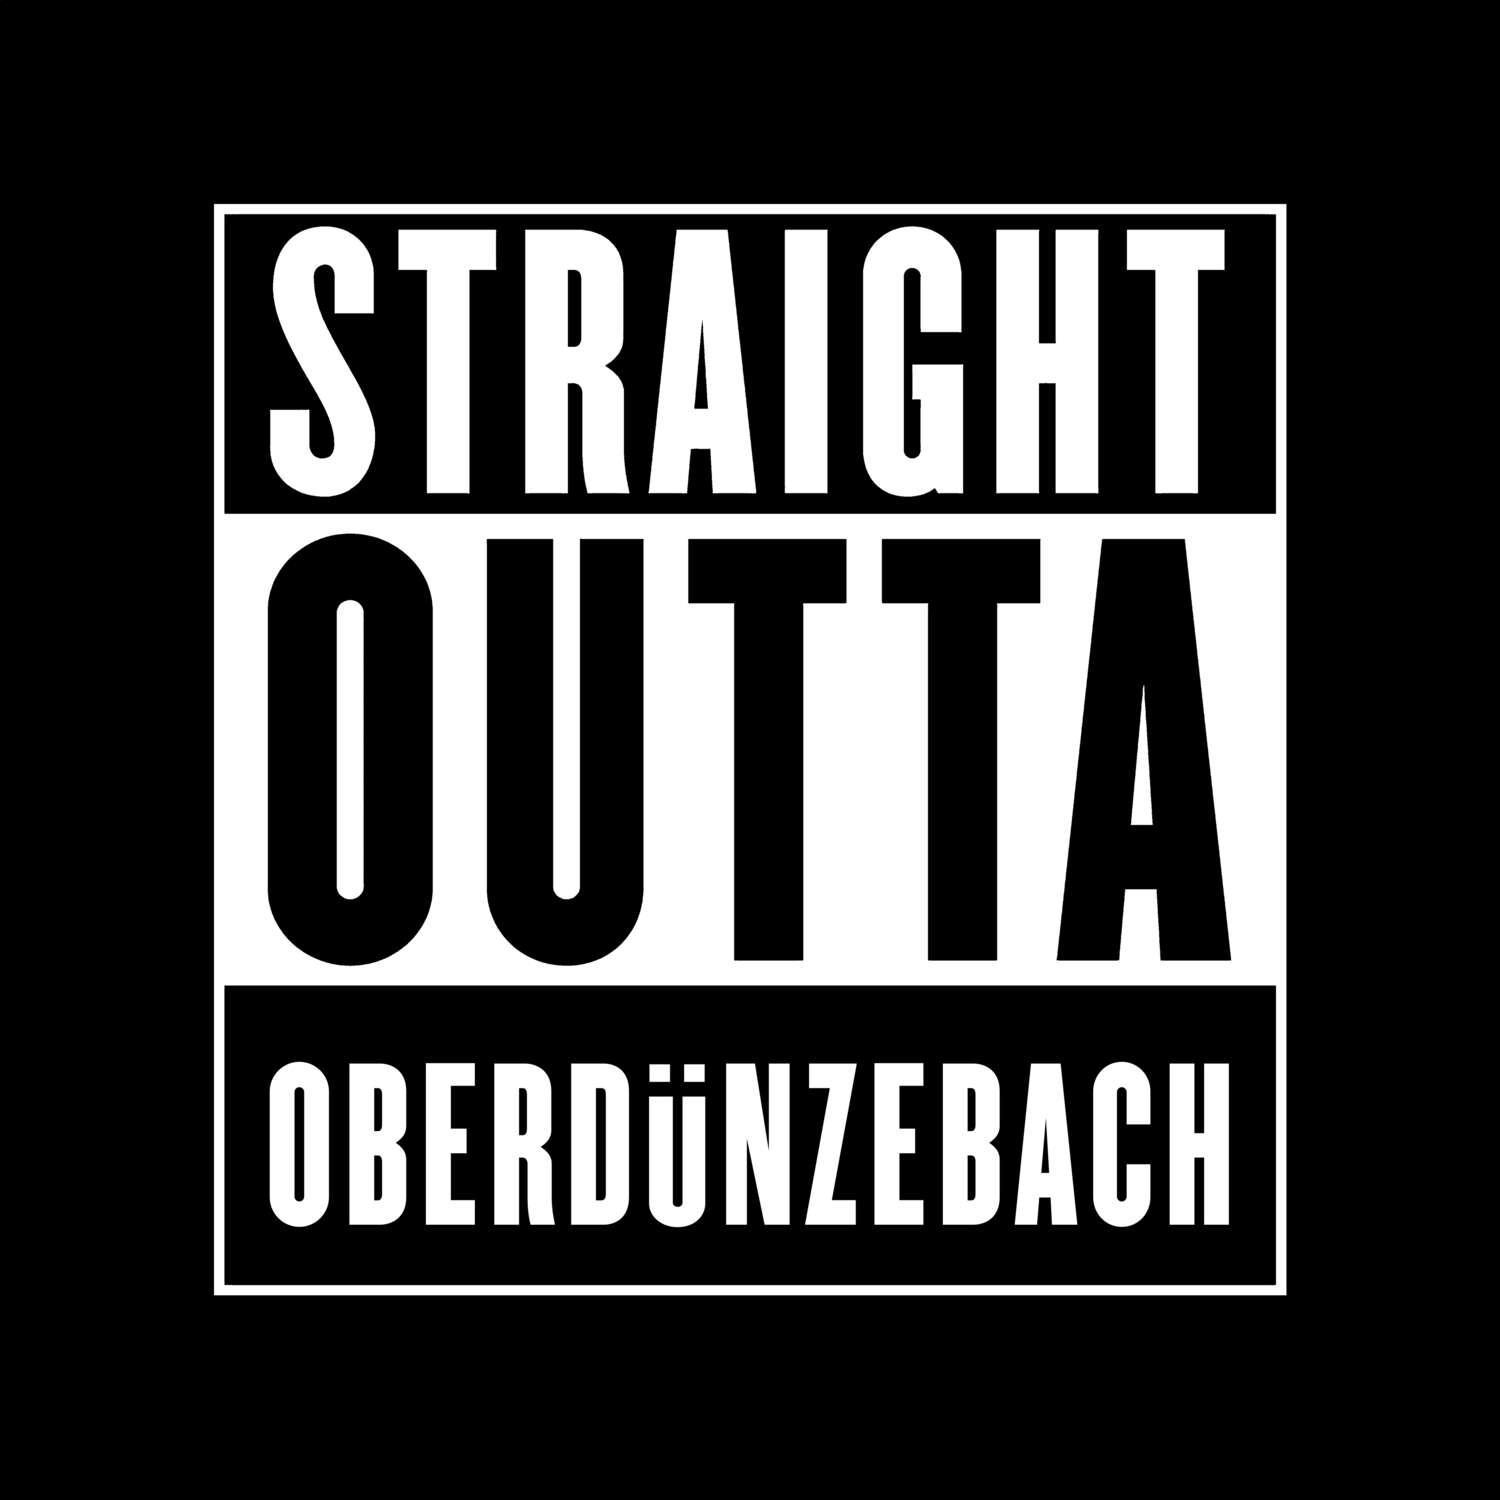 Oberdünzebach T-Shirt »Straight Outta«